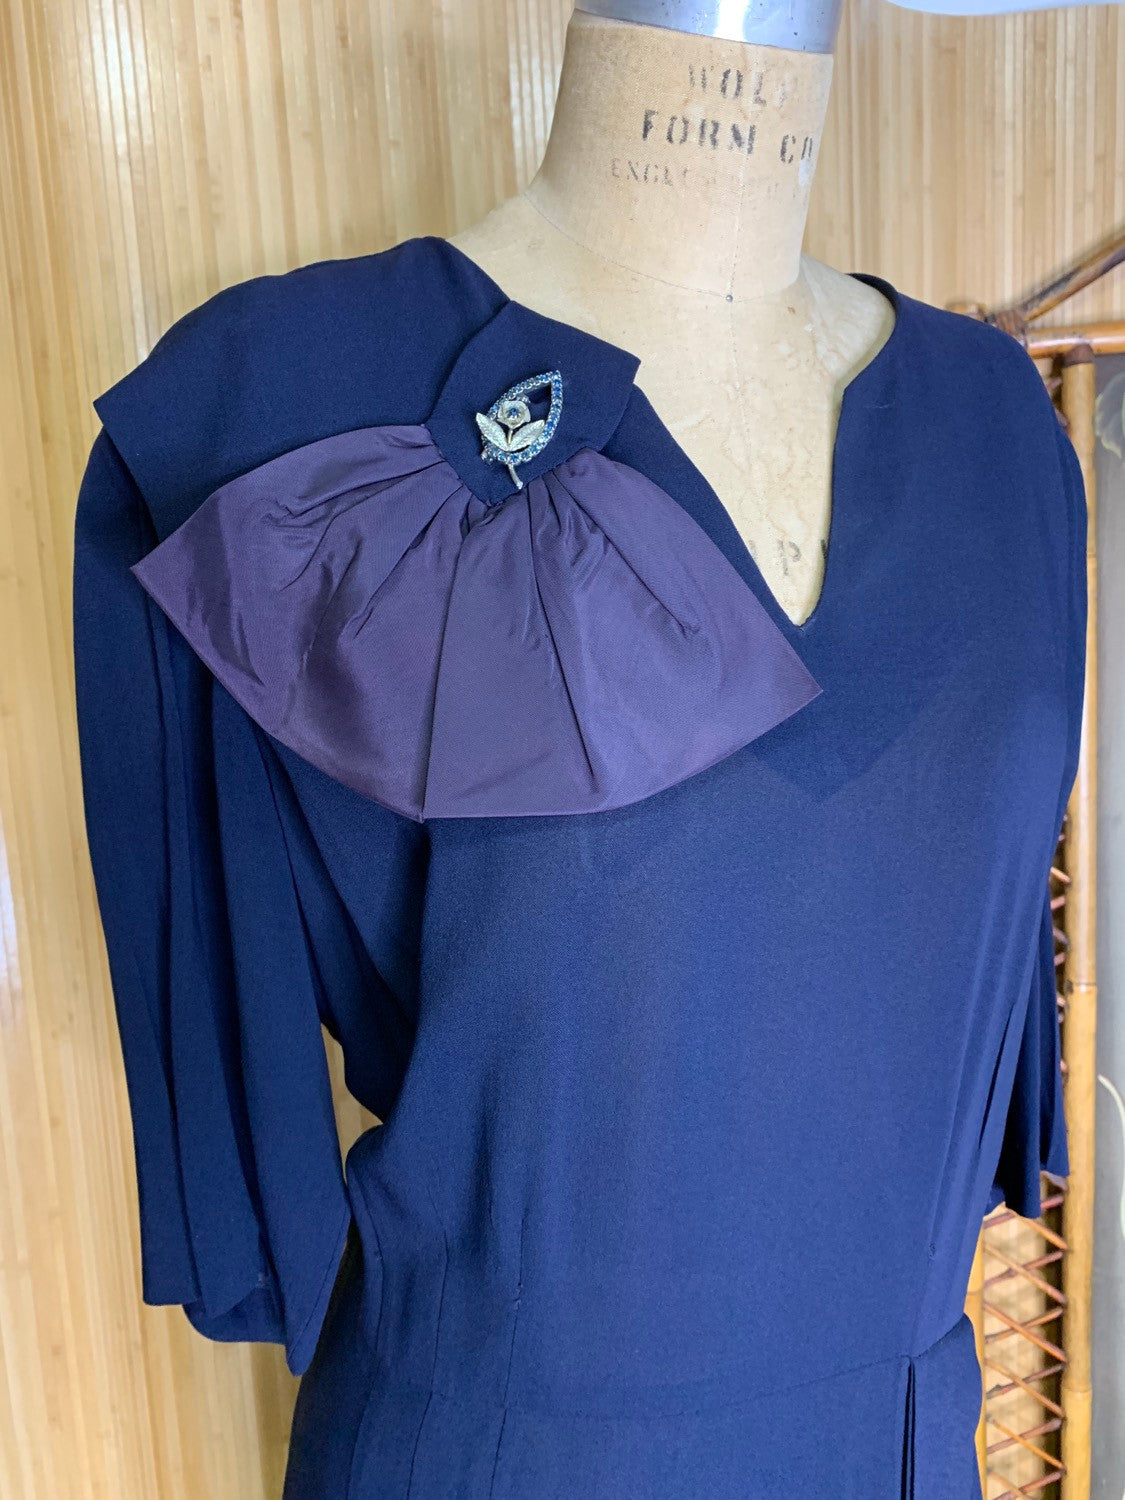 1940s Navy Silk Dress Size L/XL